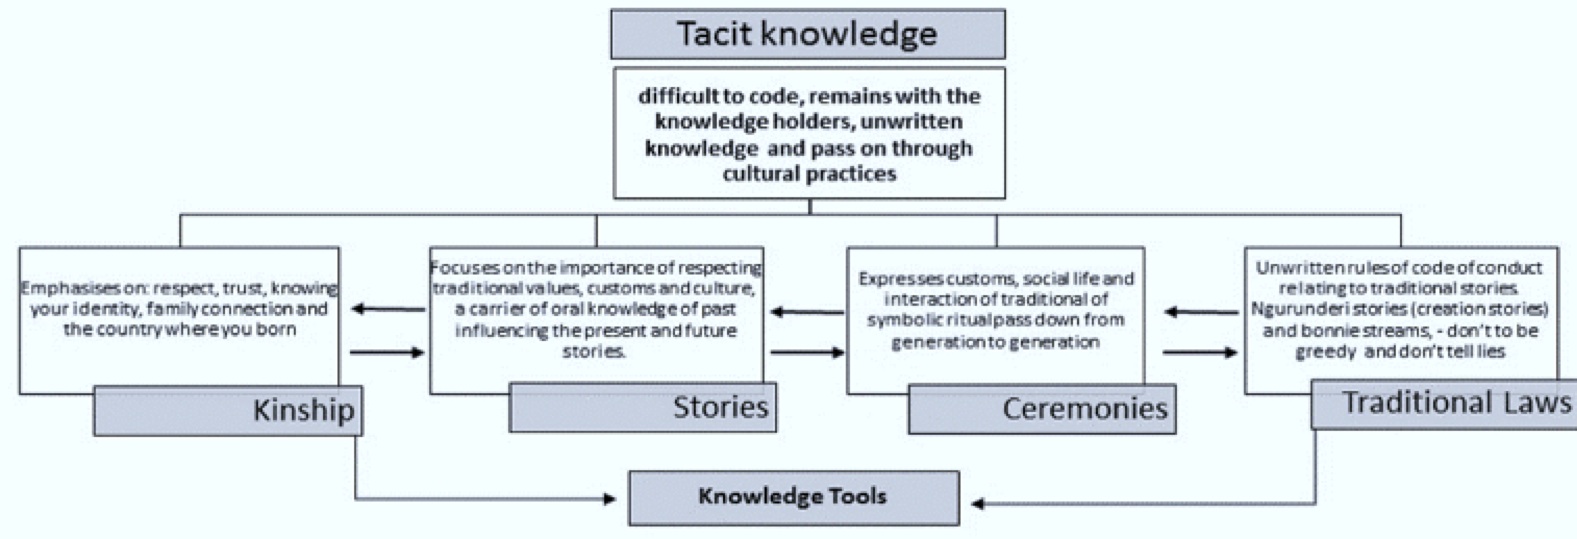 Tacit – cultural practices (knowledge tools)